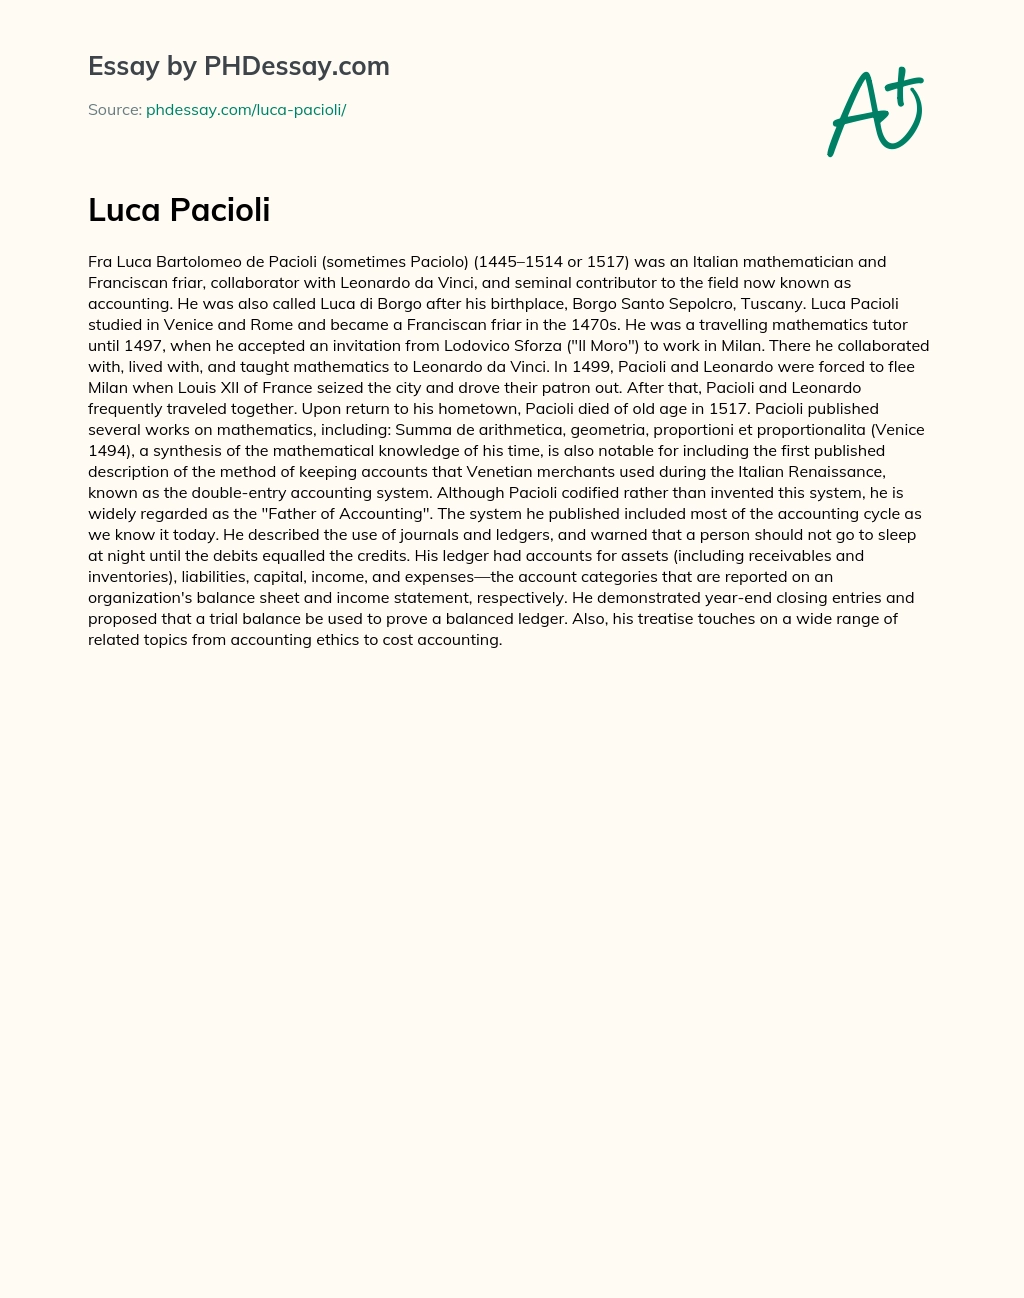 Luca Pacioli essay